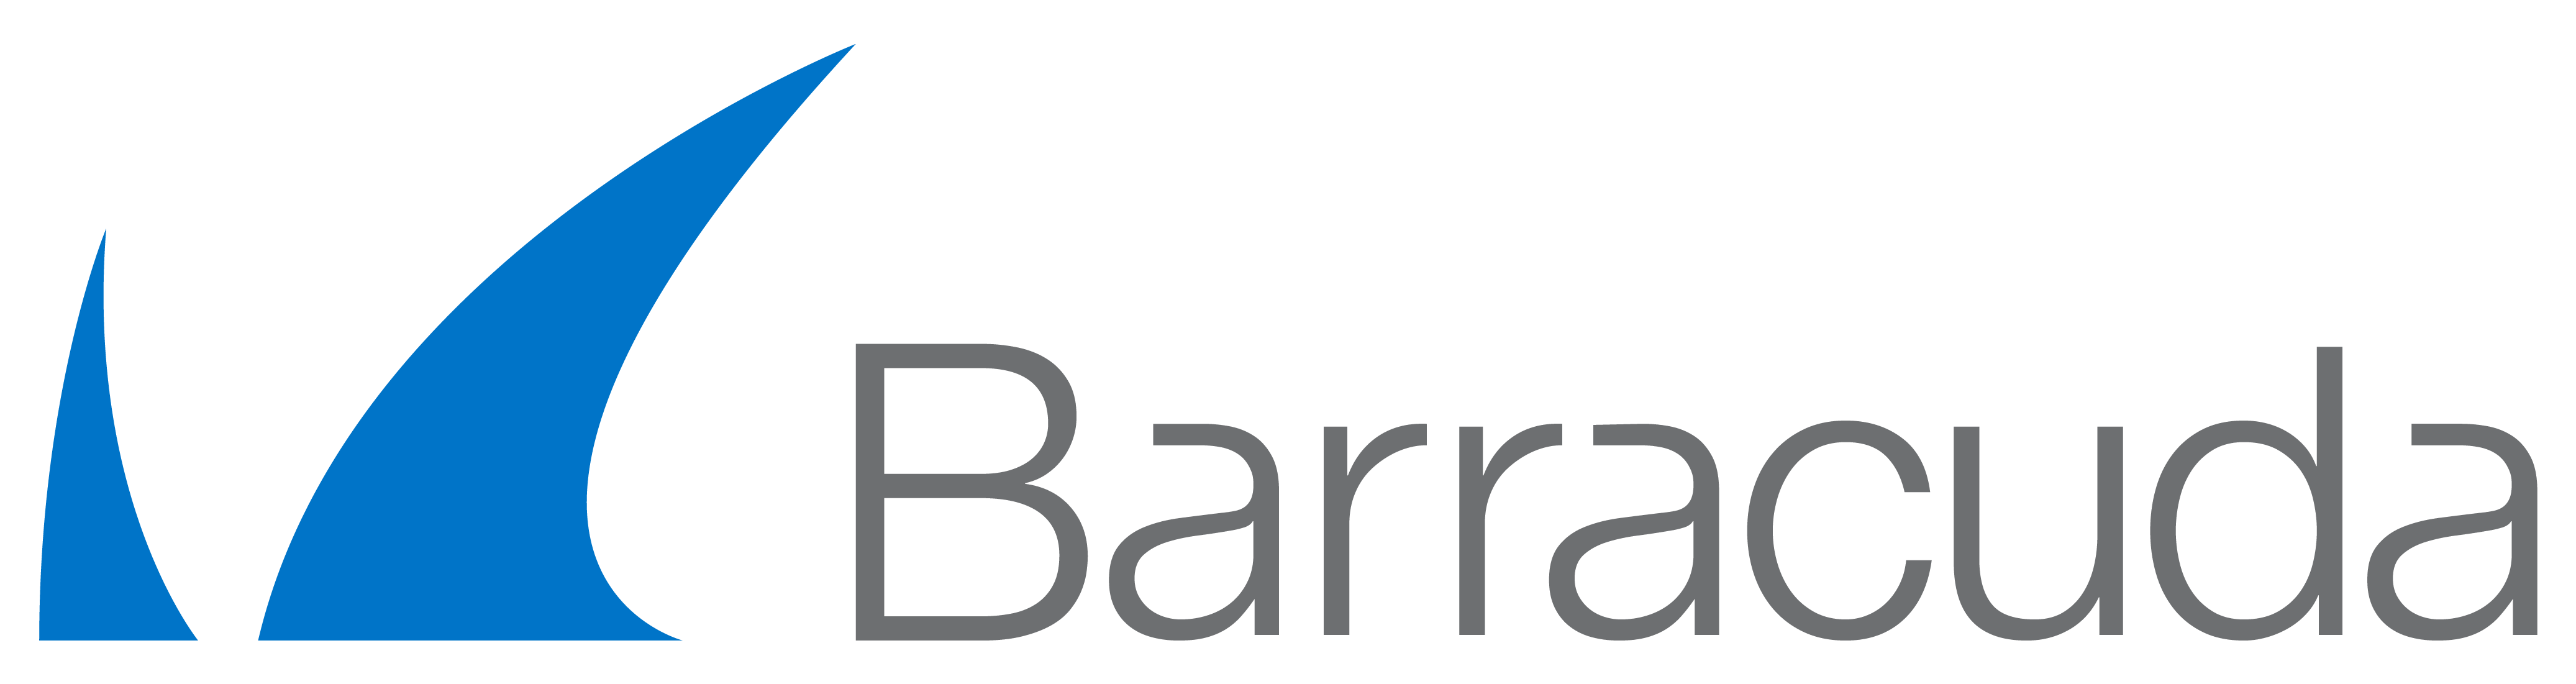 Barracuda Networks logo PNG1 Barracuda Networks